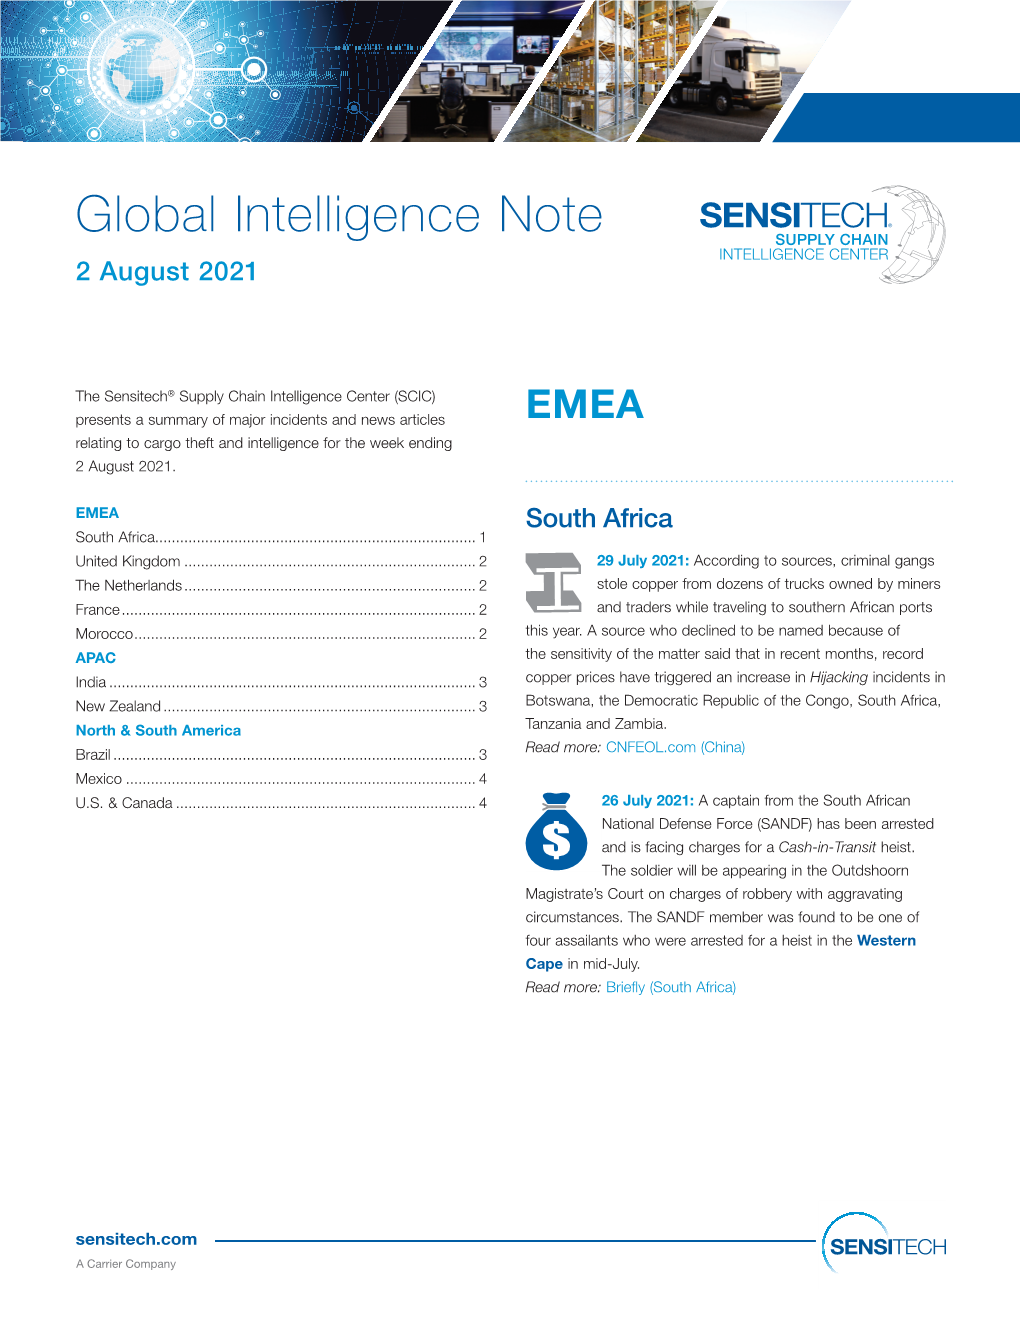 Sensitech SCIC Global Intelligence Note 2 August 2021